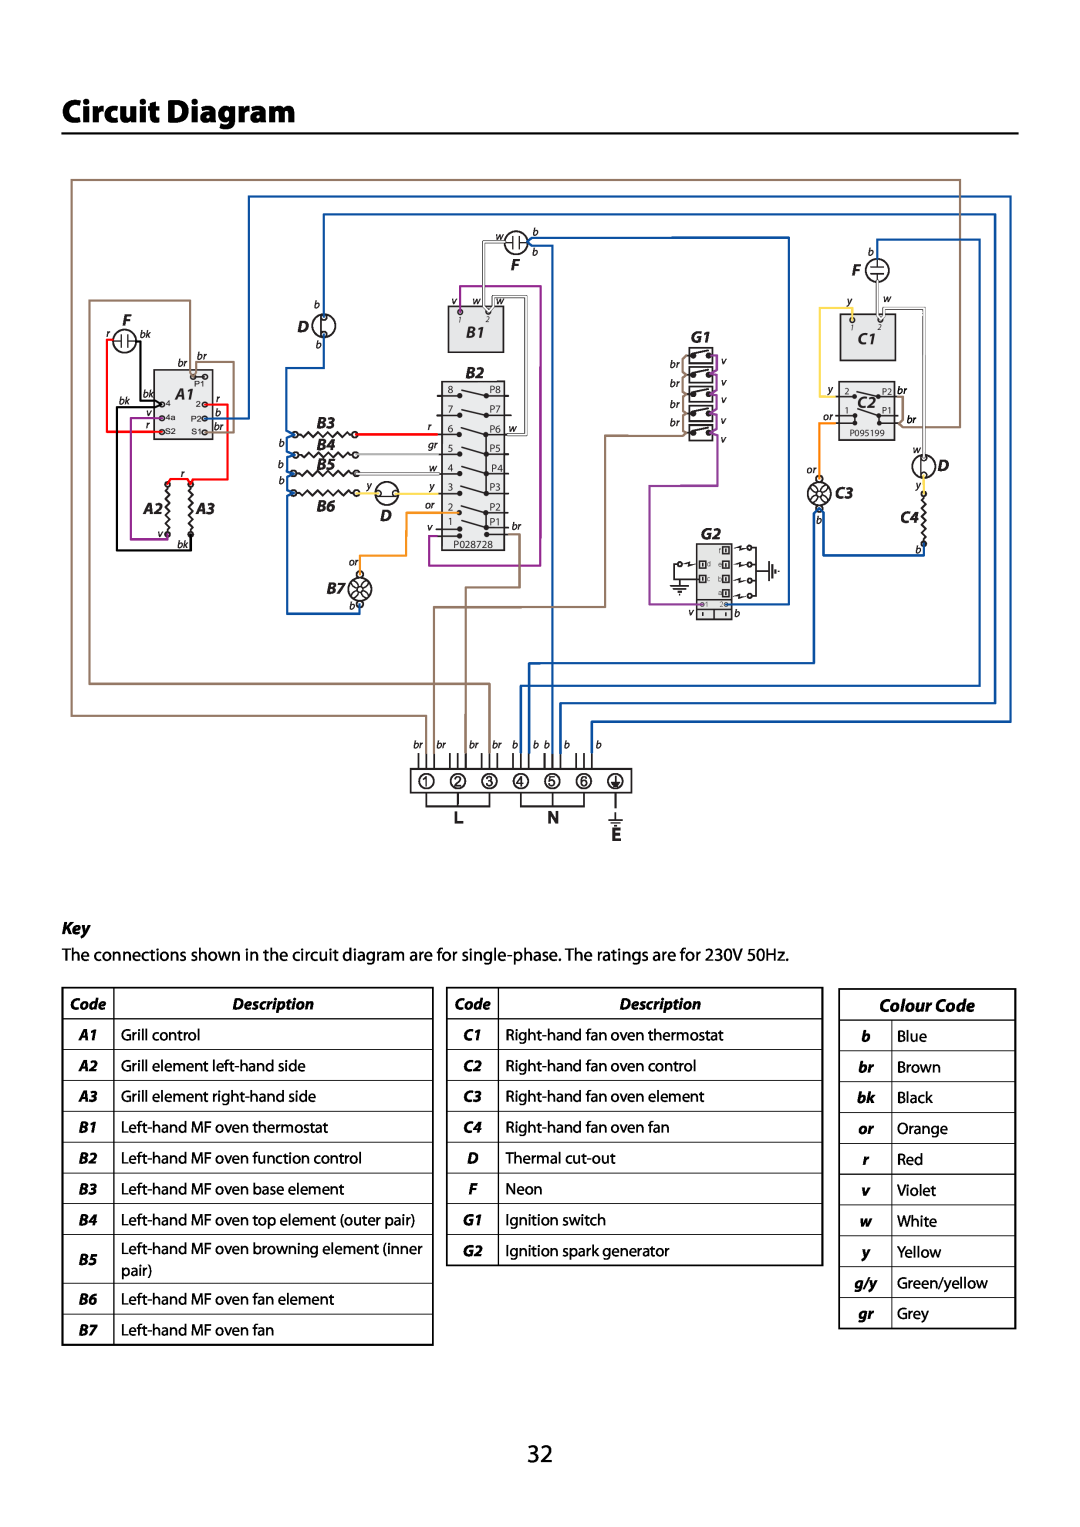 Garmin 210 GEO T DL user manual Circuit Diagram, Colour Code 